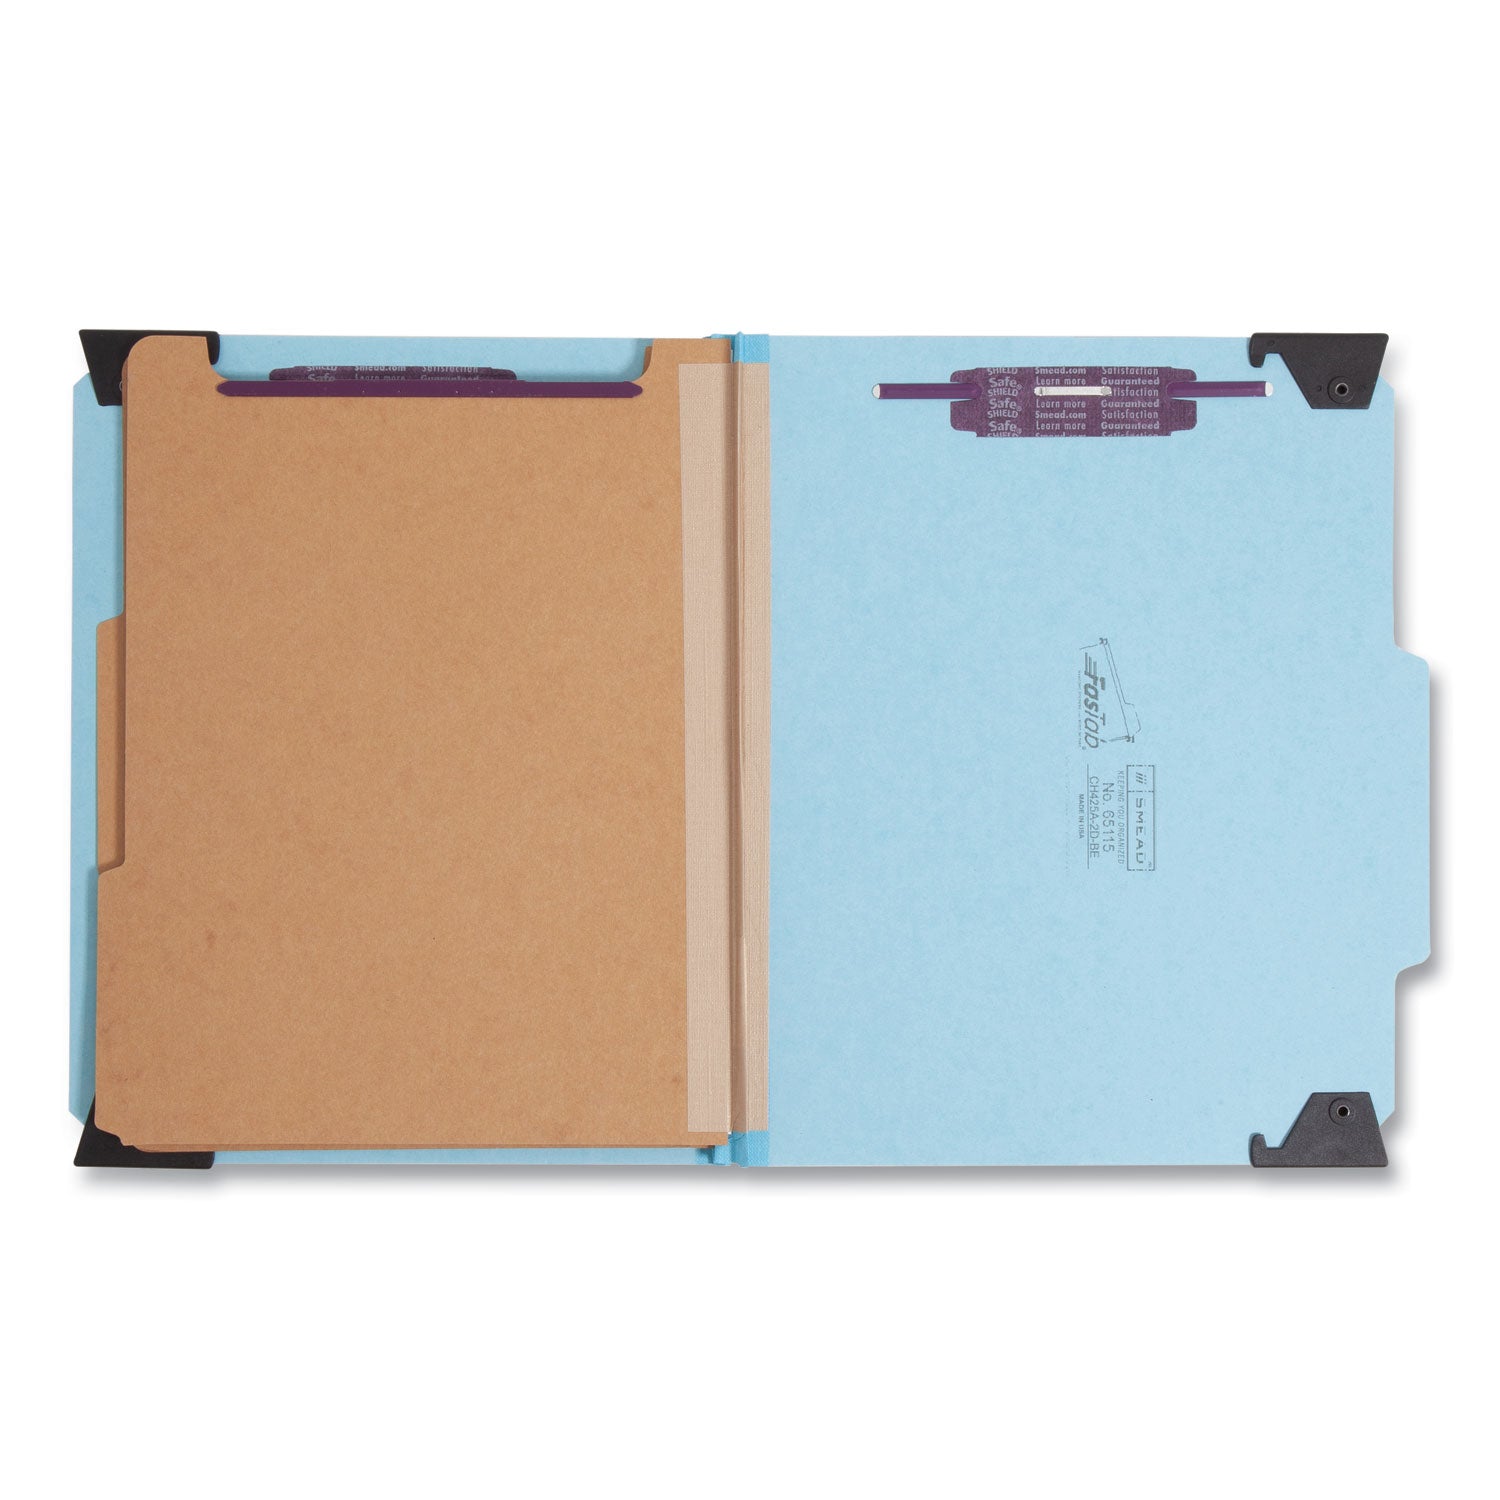 FasTab Hanging Pressboard Classification Folders, 2 Dividers, Letter Size, Blue - 